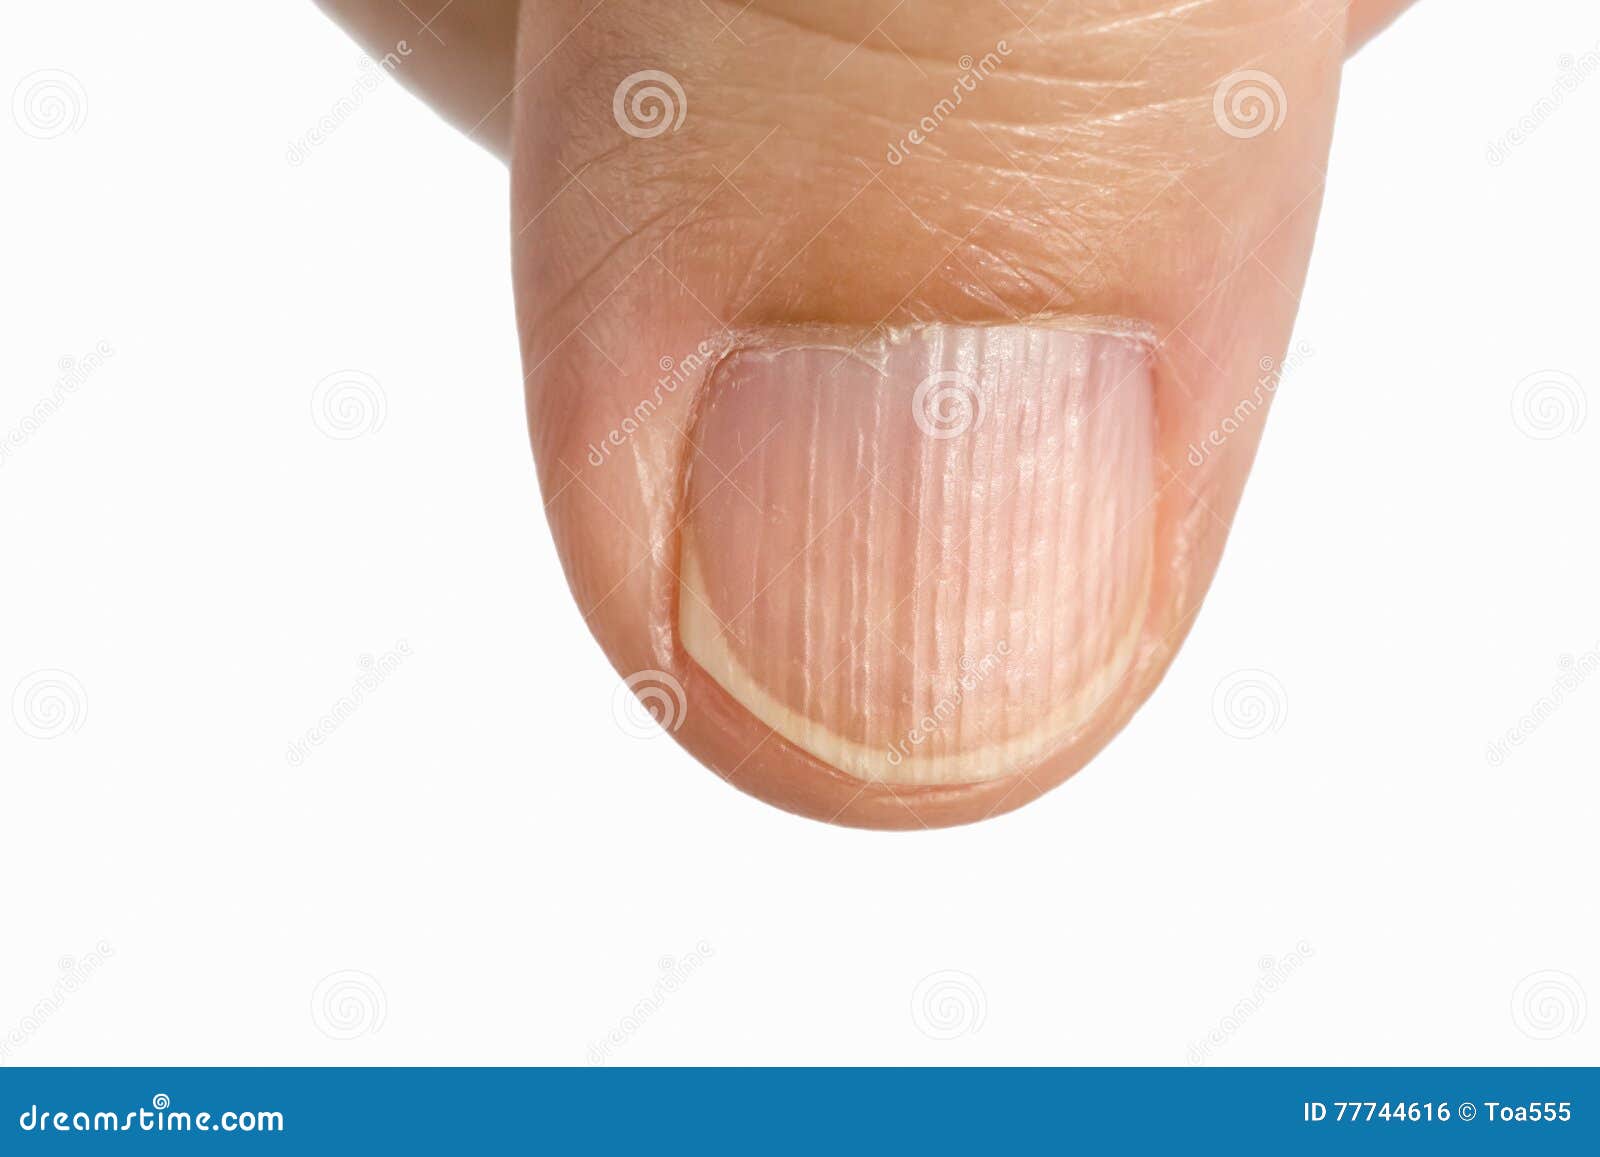 vertical ridges on the fingernails